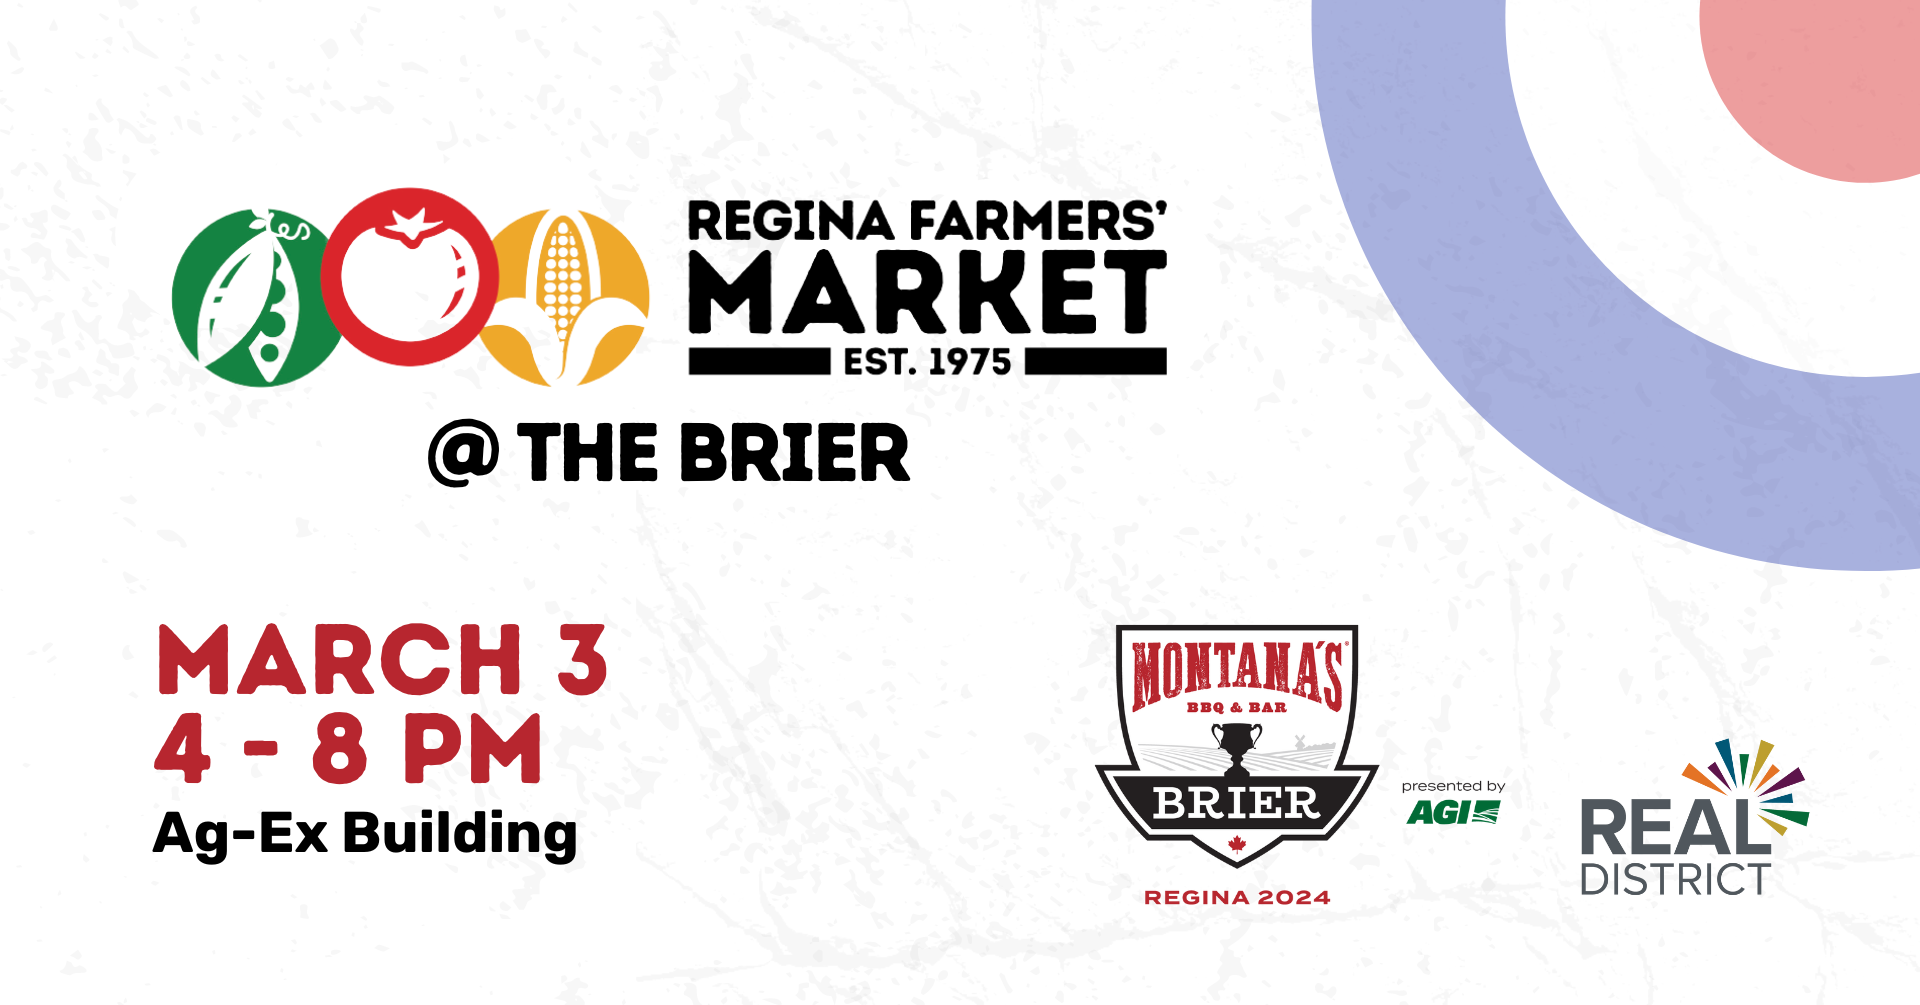 Regina Farmers' Market @ The Brier